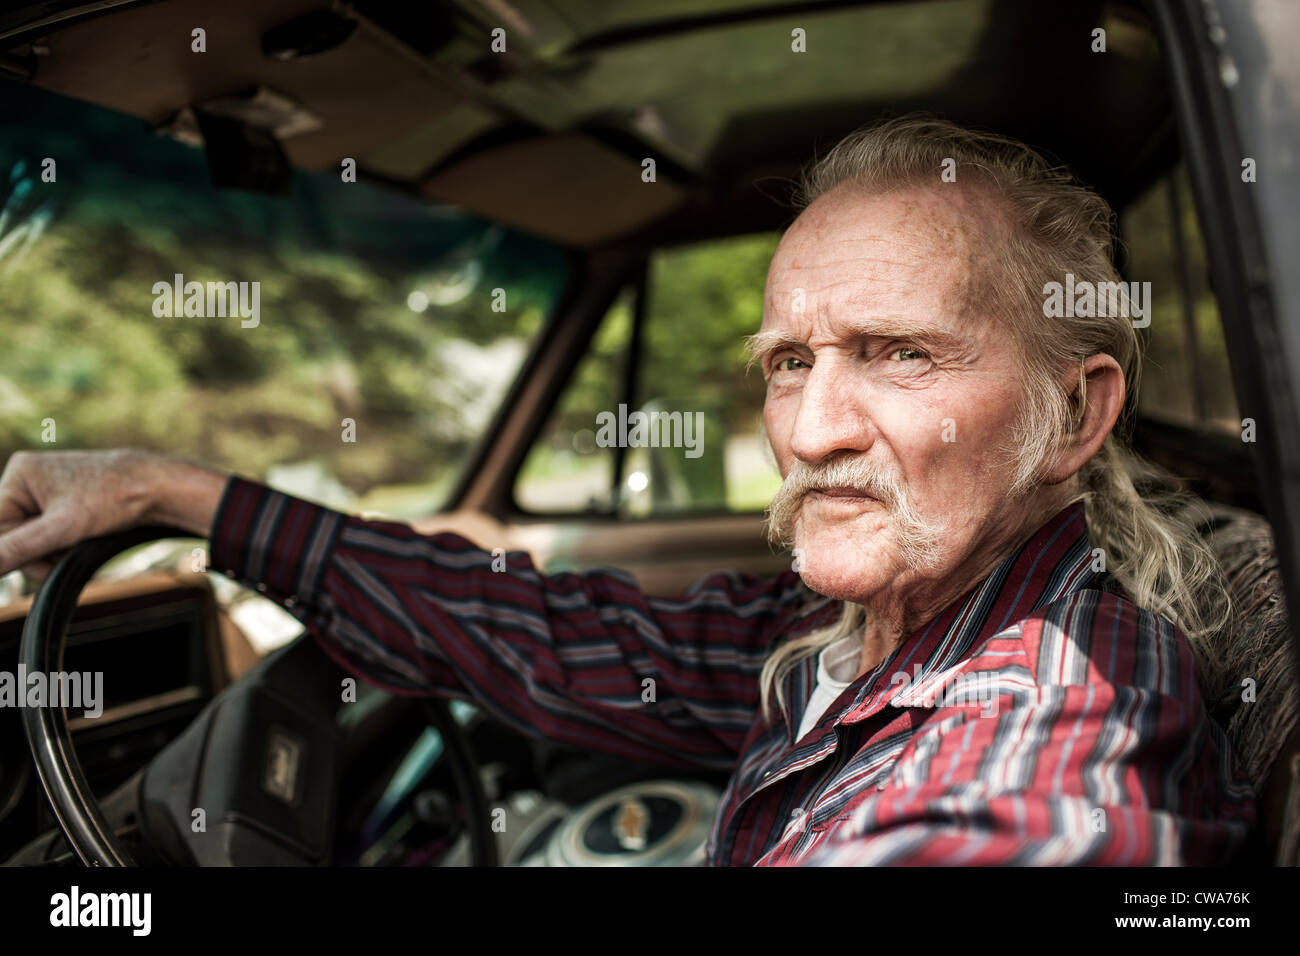 Senior man inside car Stock Photo